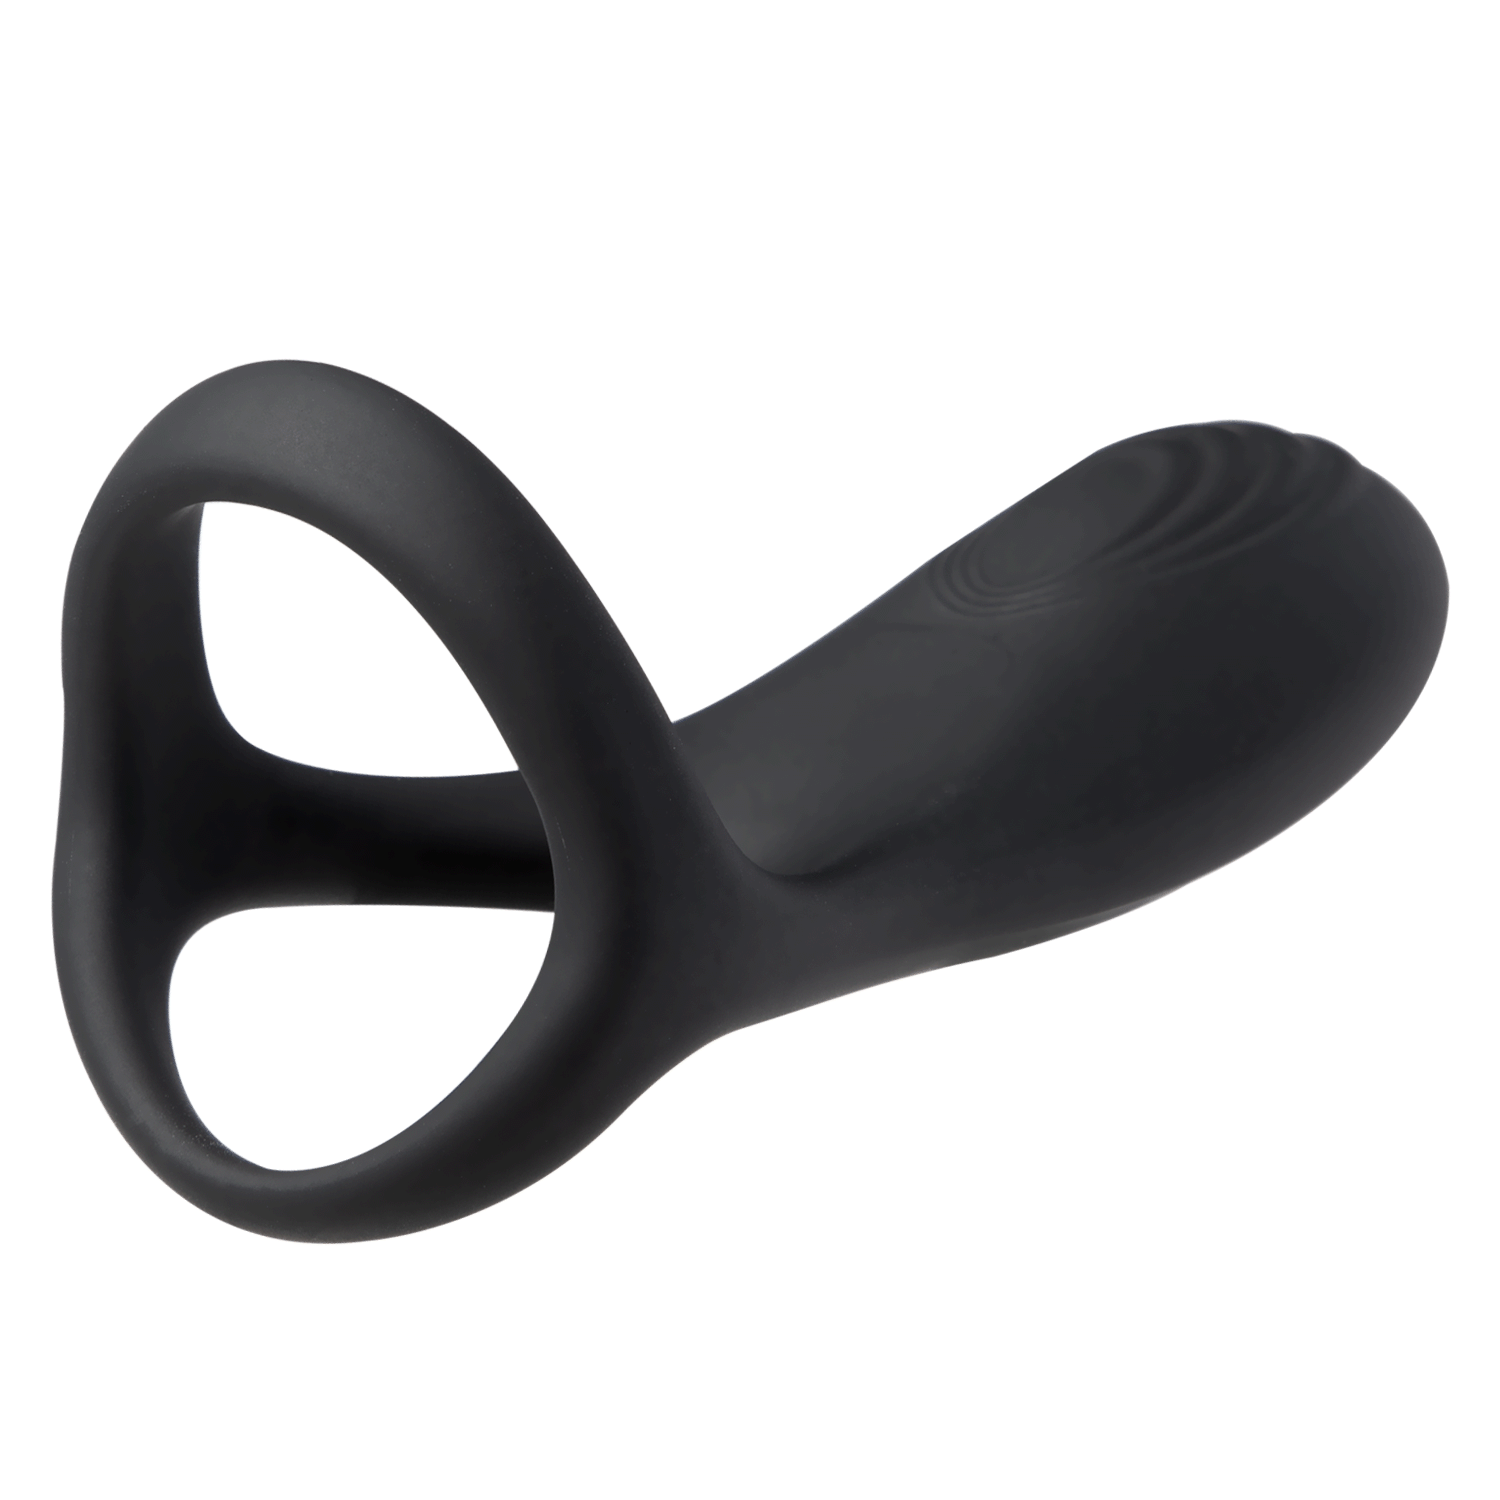 Ryder – Fernbedienungs-Dual-Ring-Vibrations-Penisring für Paarspiele